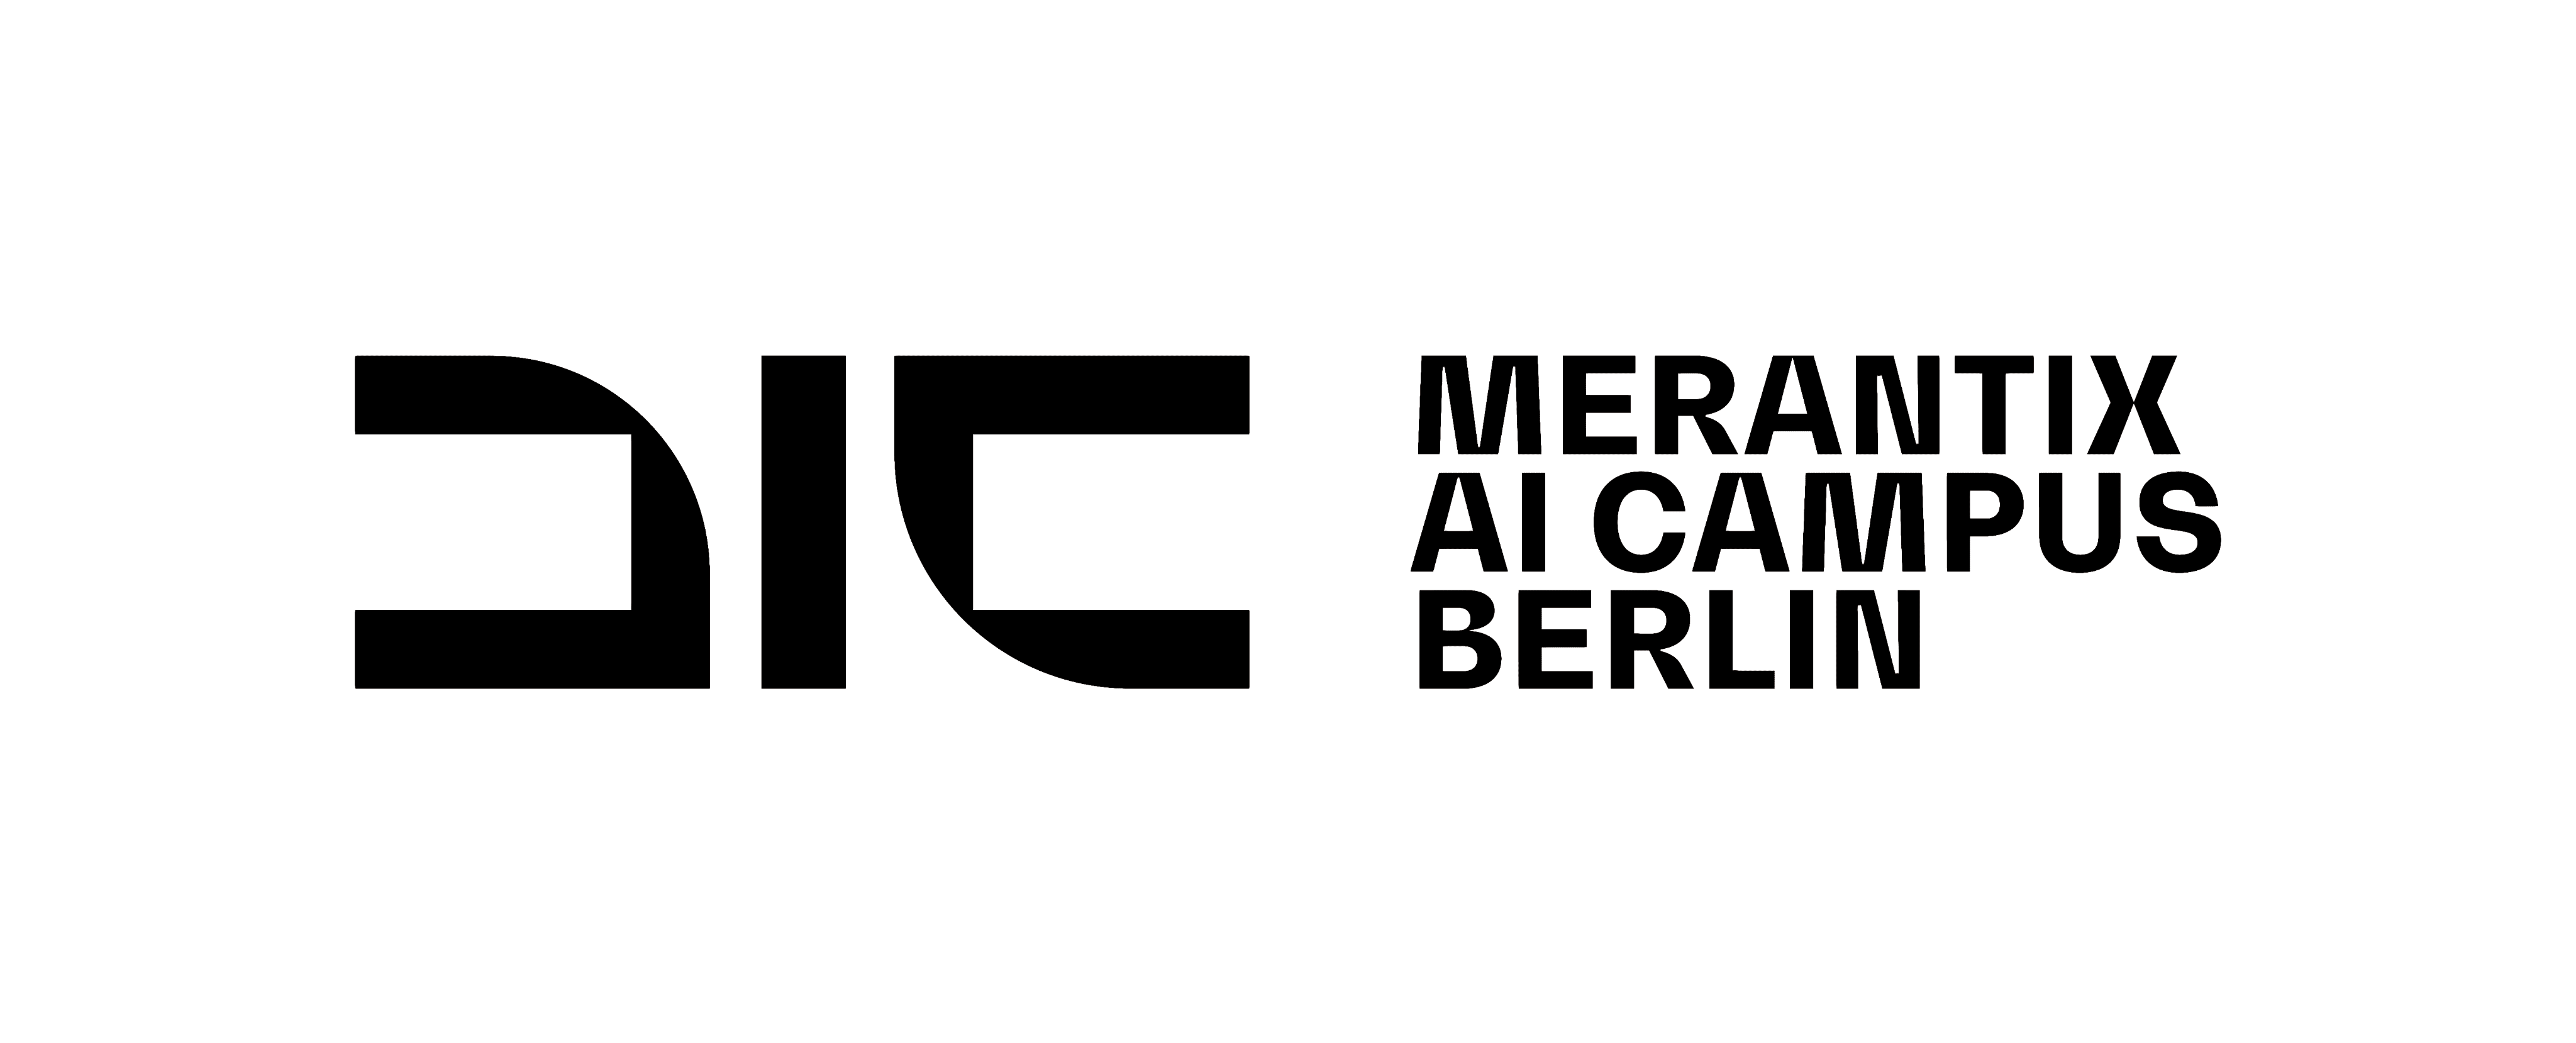 Merantix AI Campus Berlin logo